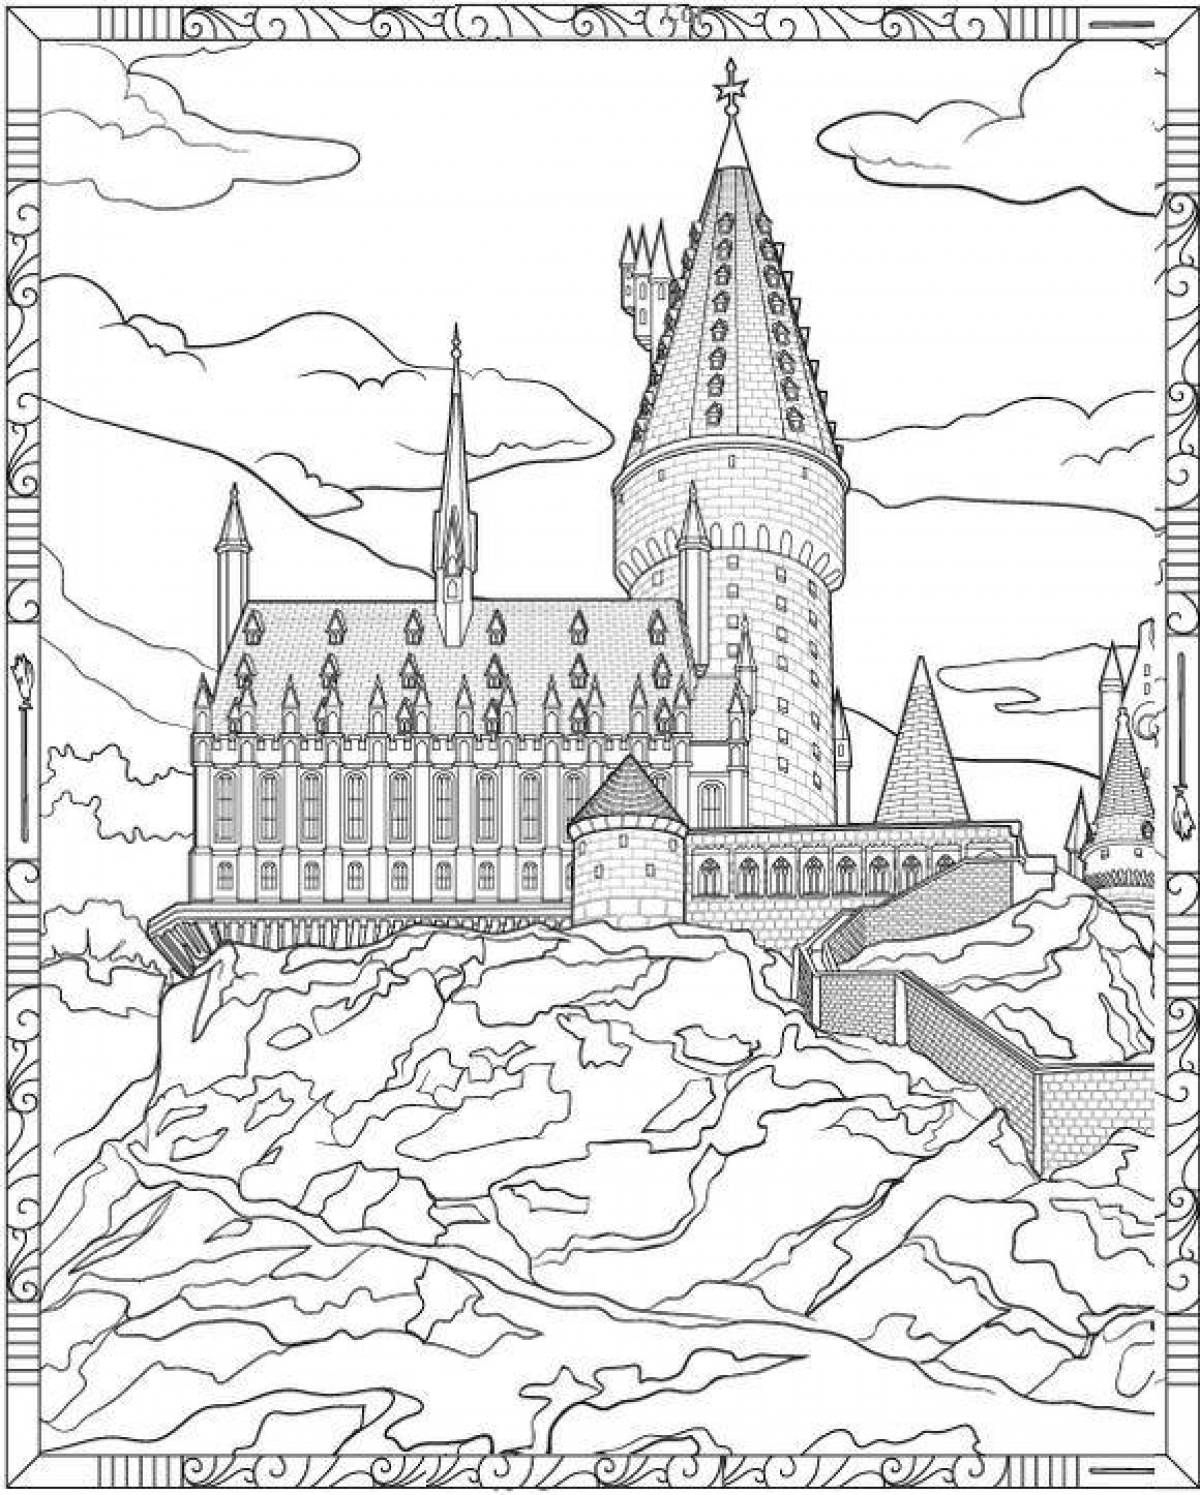 Inspirational hogwarts coloring book